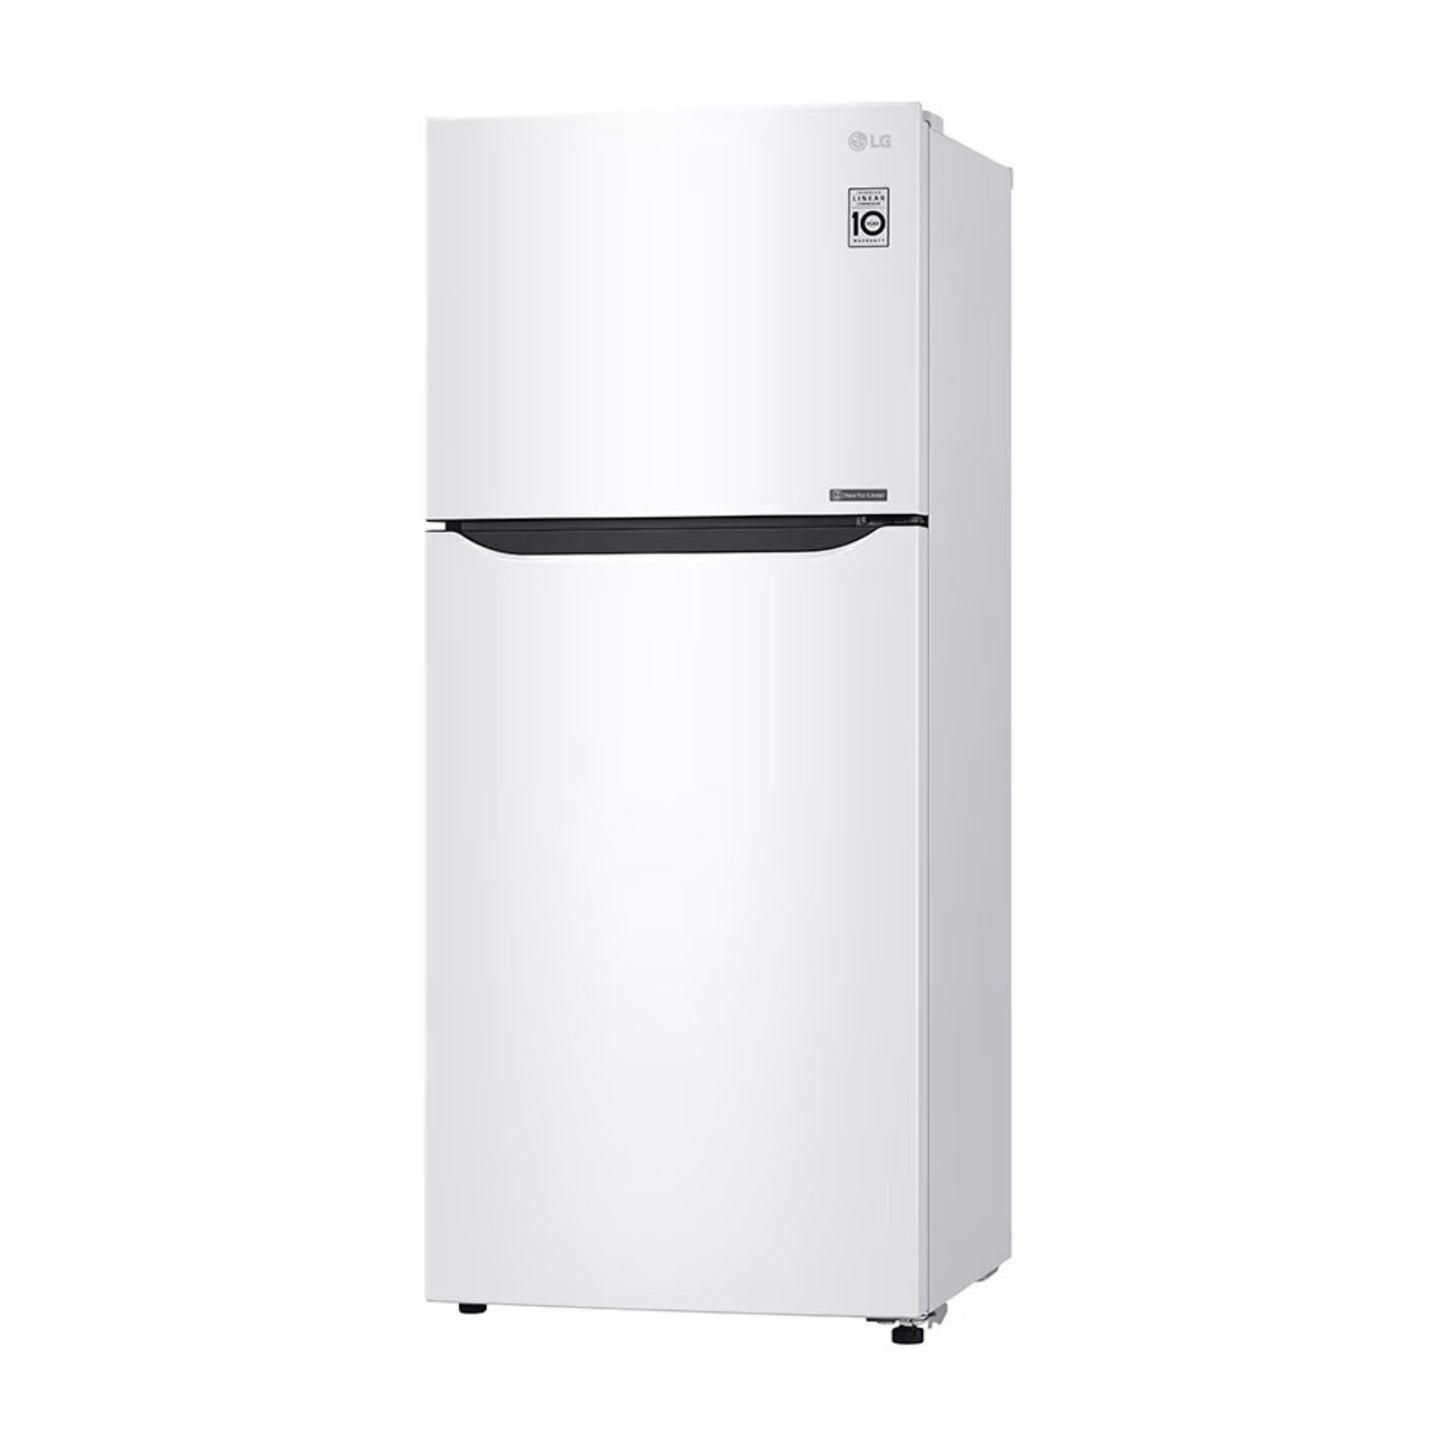 LG 490L Inverter Refrigerator, GN-492SQCN